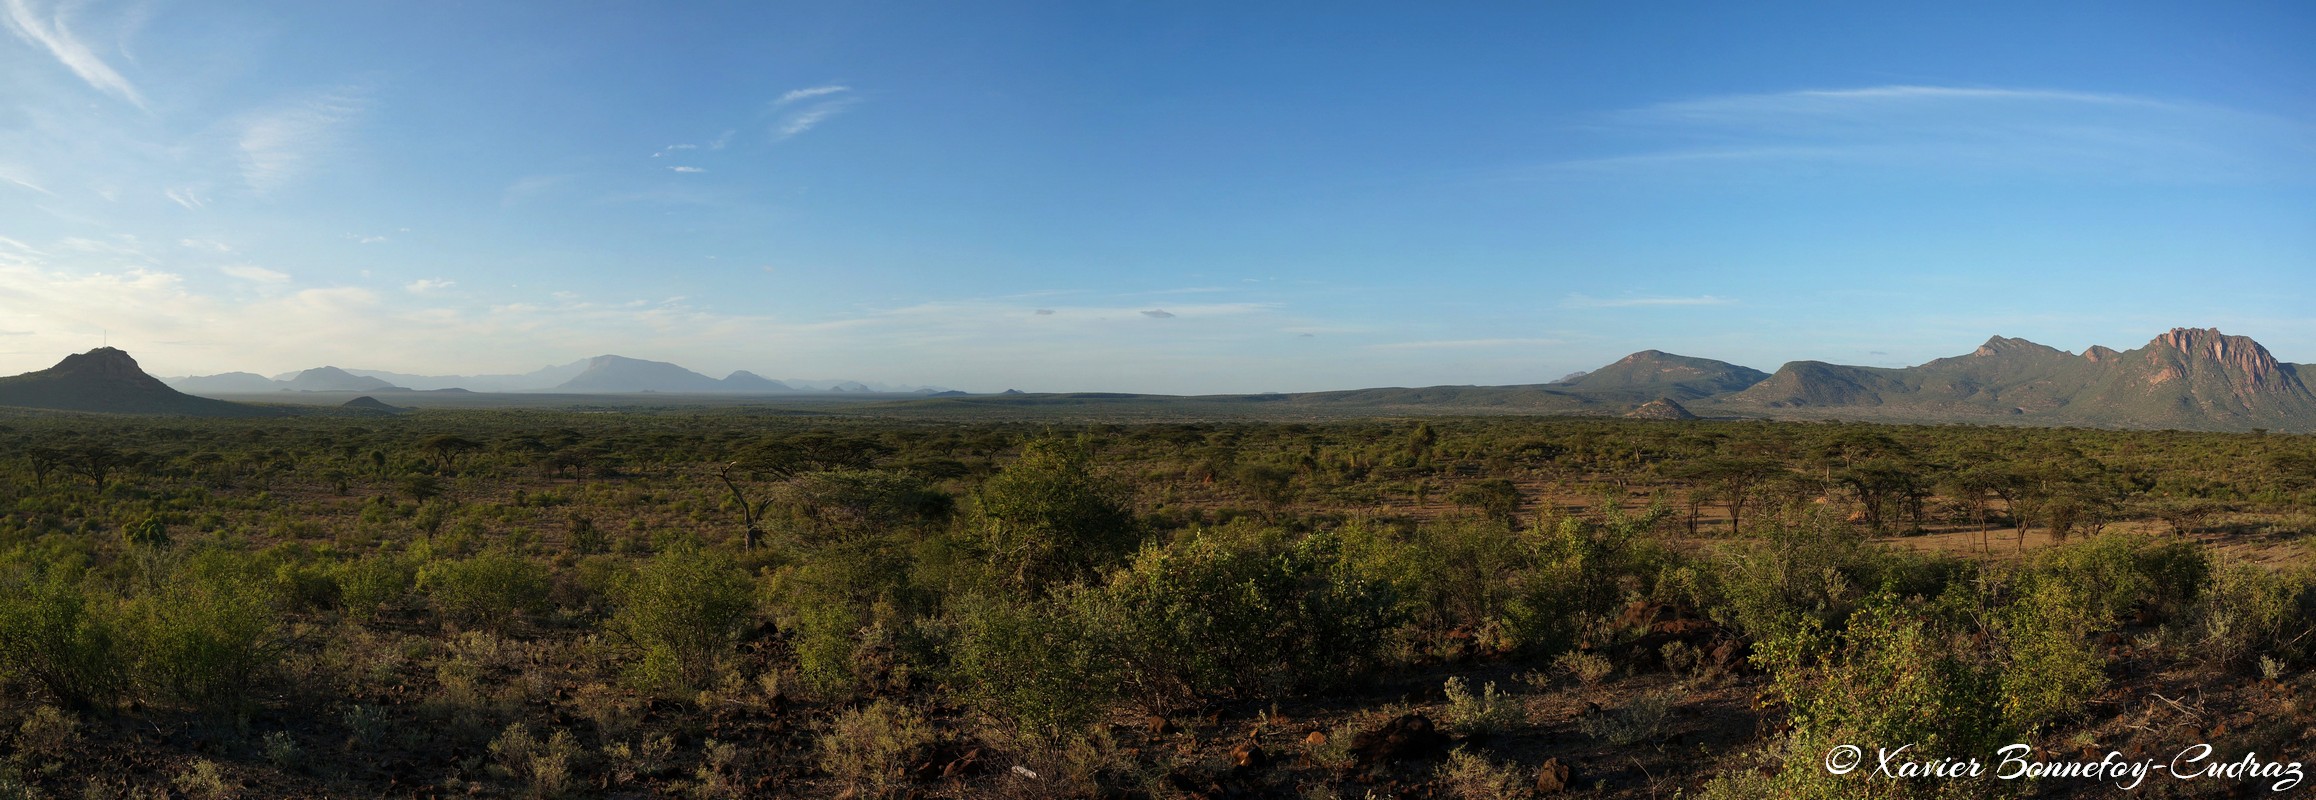 Shaba - Panorama
Mots-clés: Archers Post geo:lat=0.63257200 geo:lon=37.74314400 geotagged KEN Kenya Samburu Isiolo Shaba National Reserve Montagne panorama